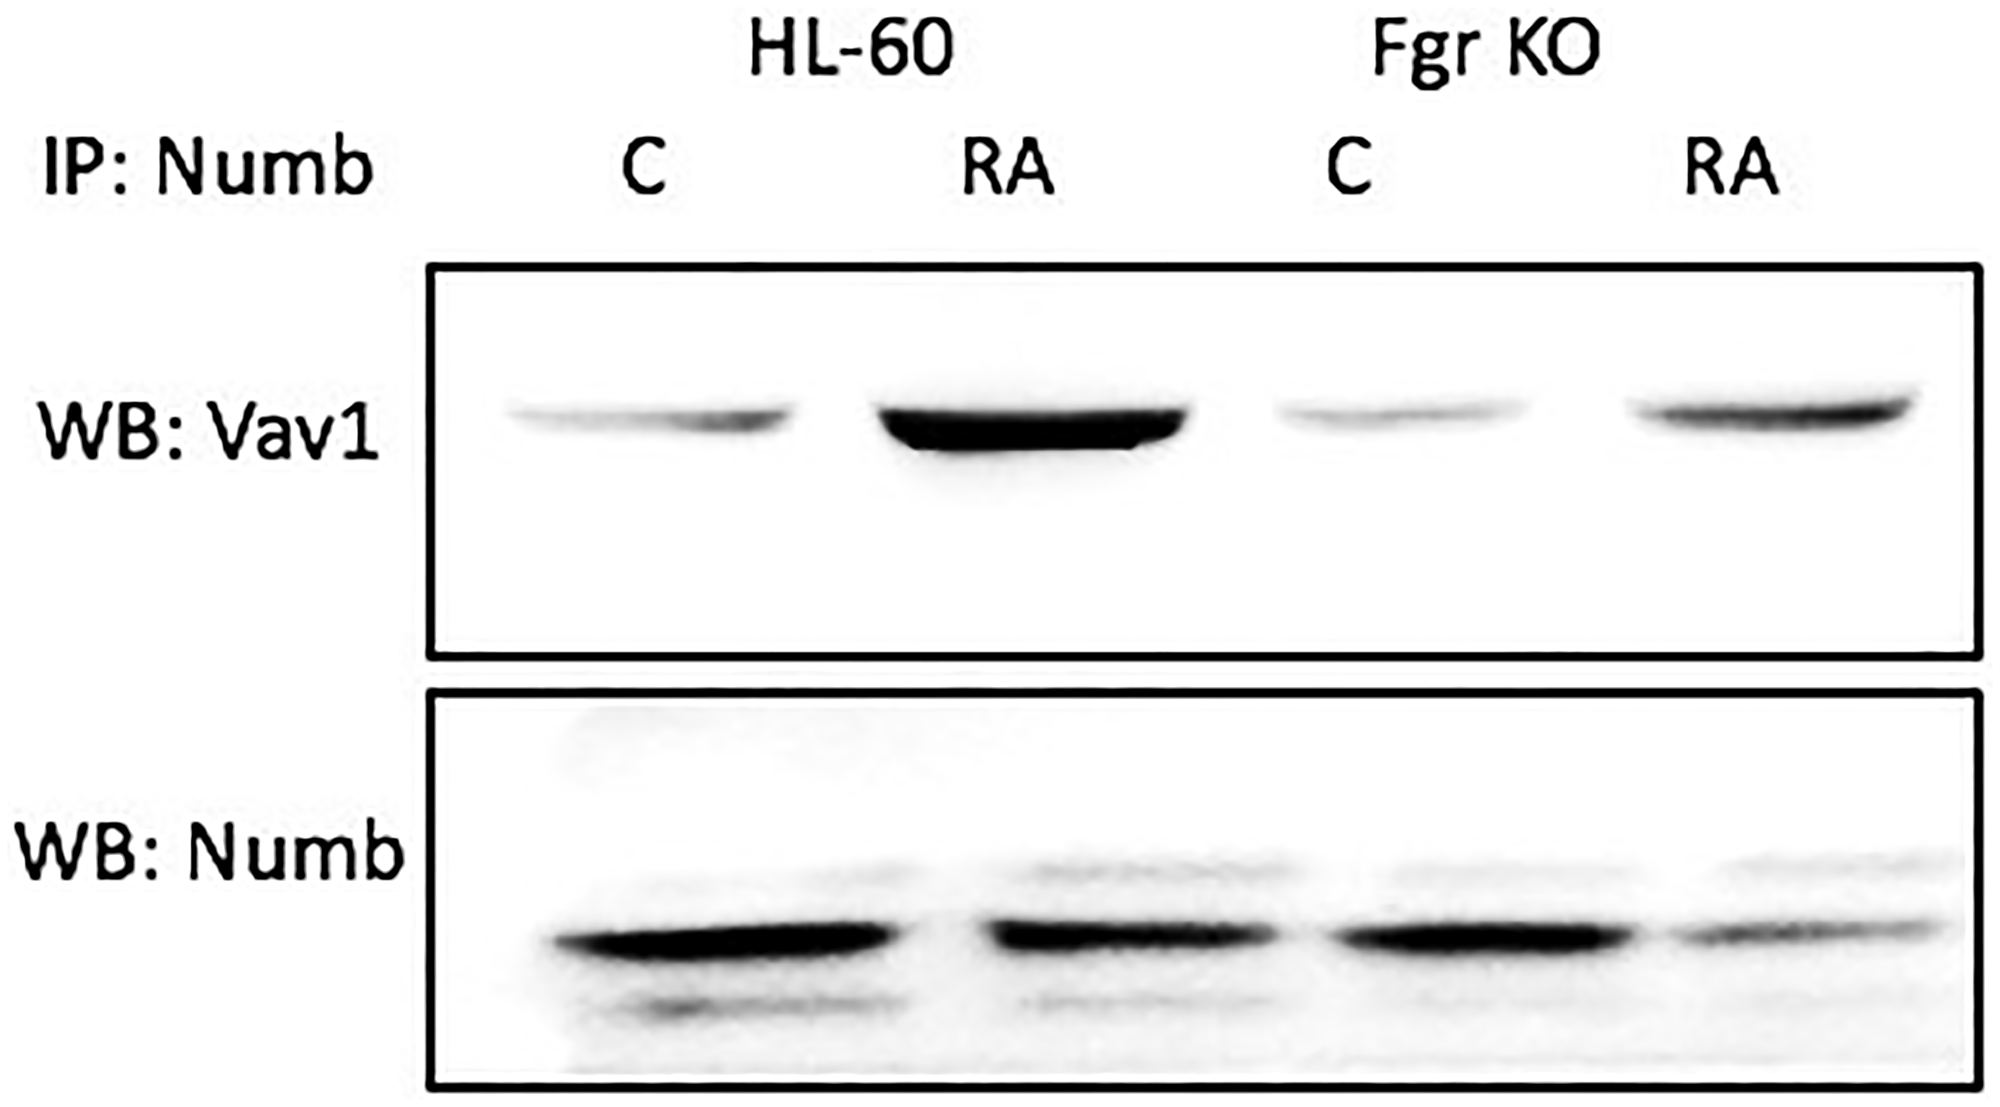 Numb binding Vav in HL-60 wt and Fgr KO cells assayed by immunoprecipitation.